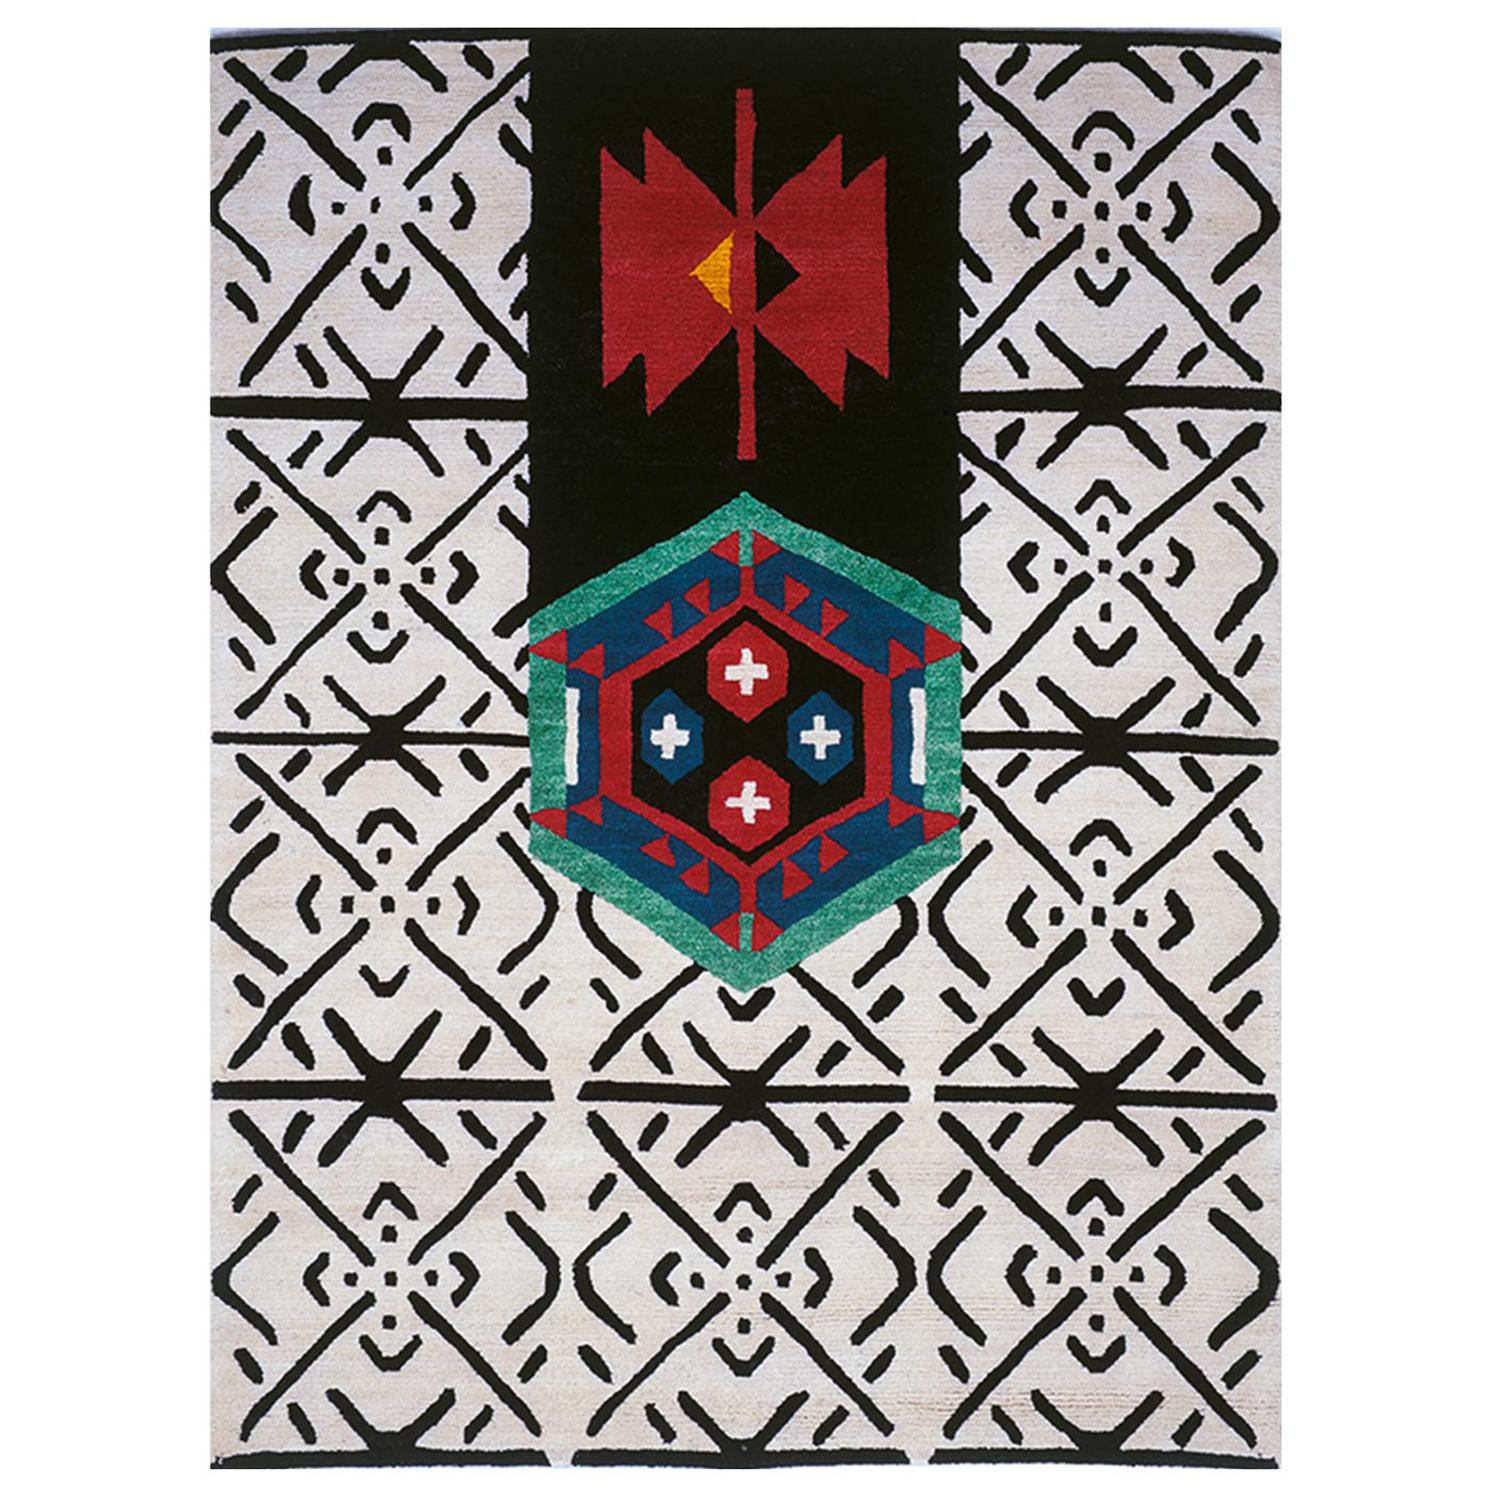 Ground Line 1 Woollen Carpet by Nanda Vigo for Post Design Collection/Memphis